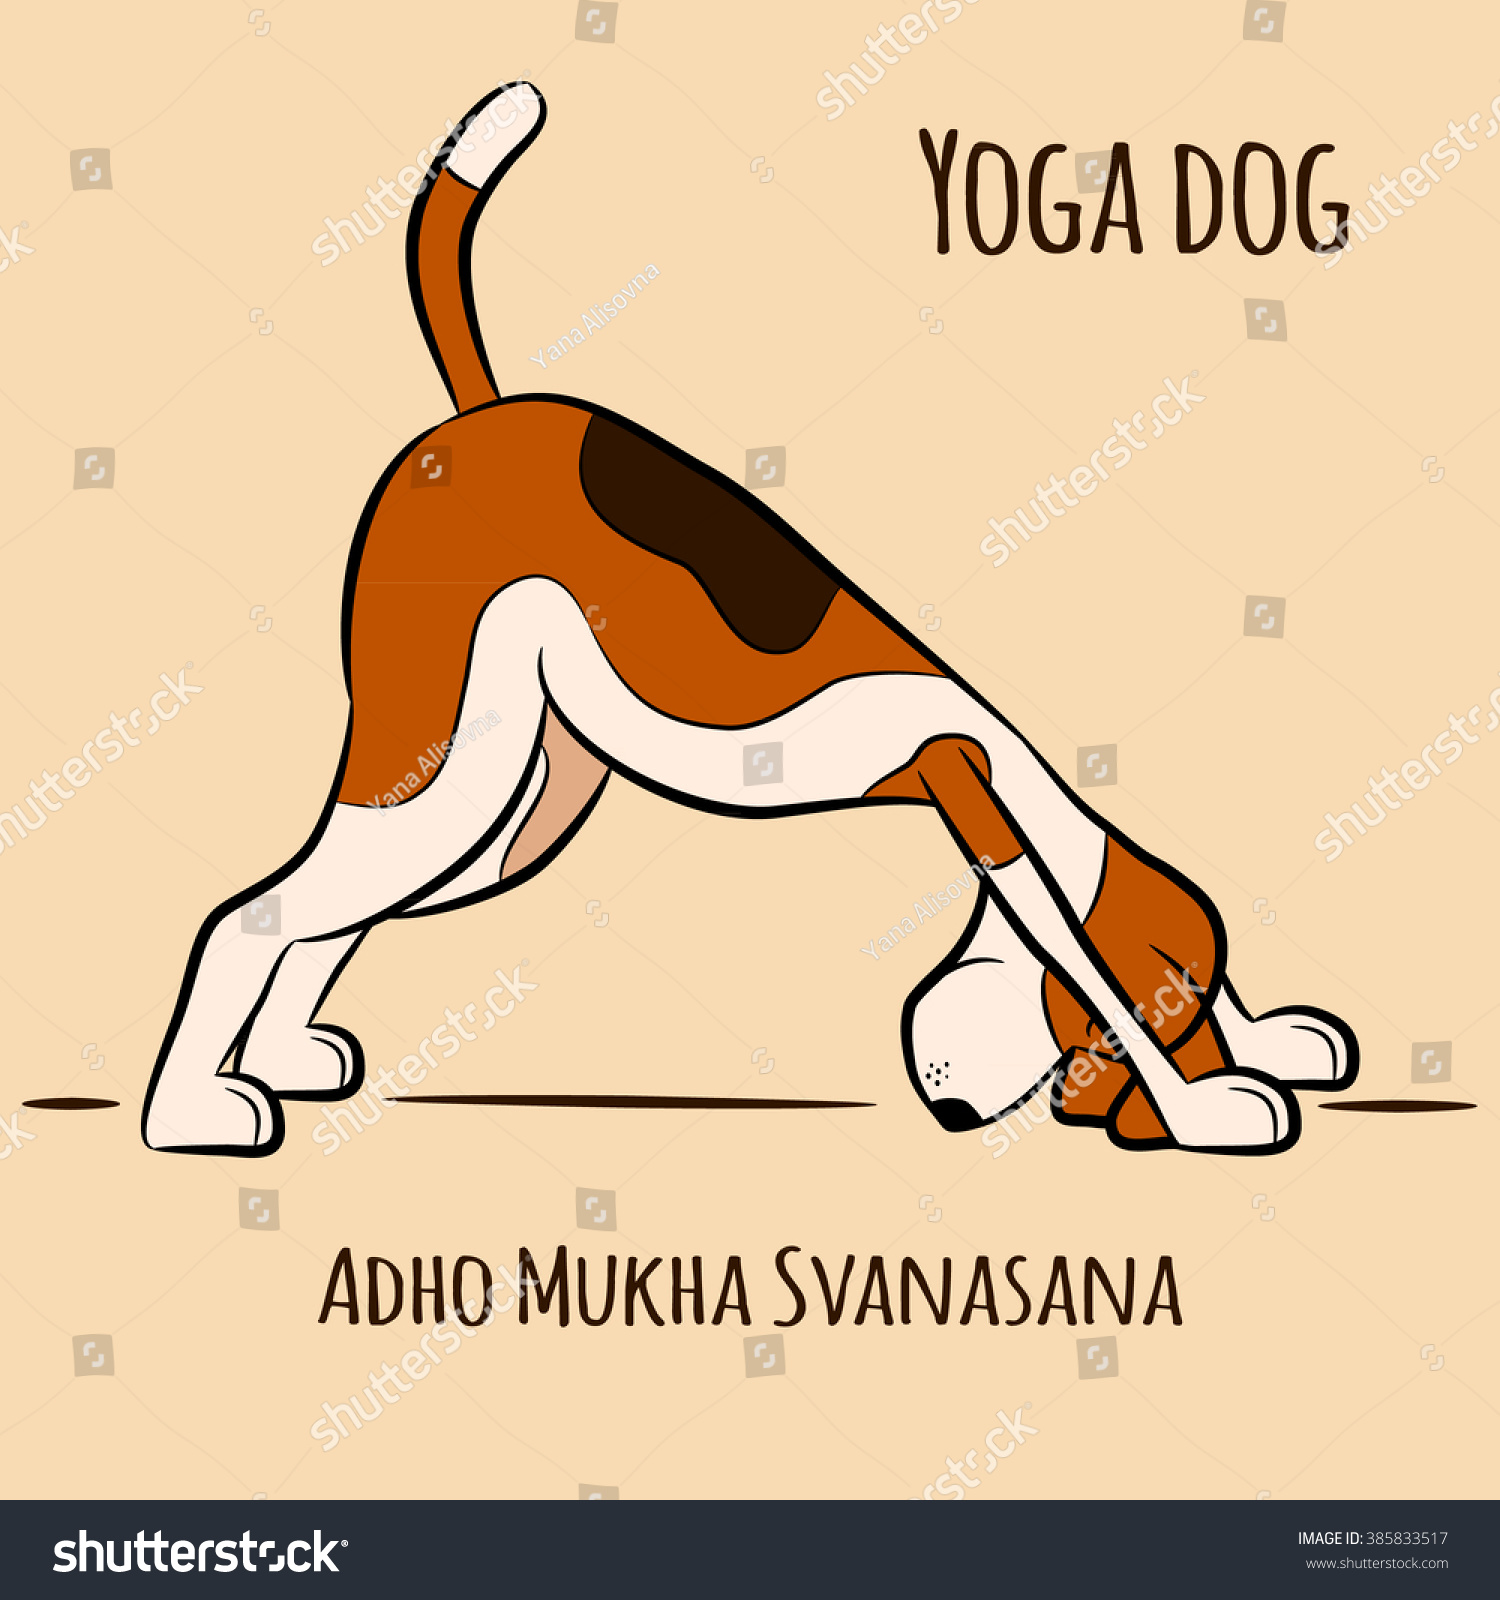 yoga dog clipart - photo #31